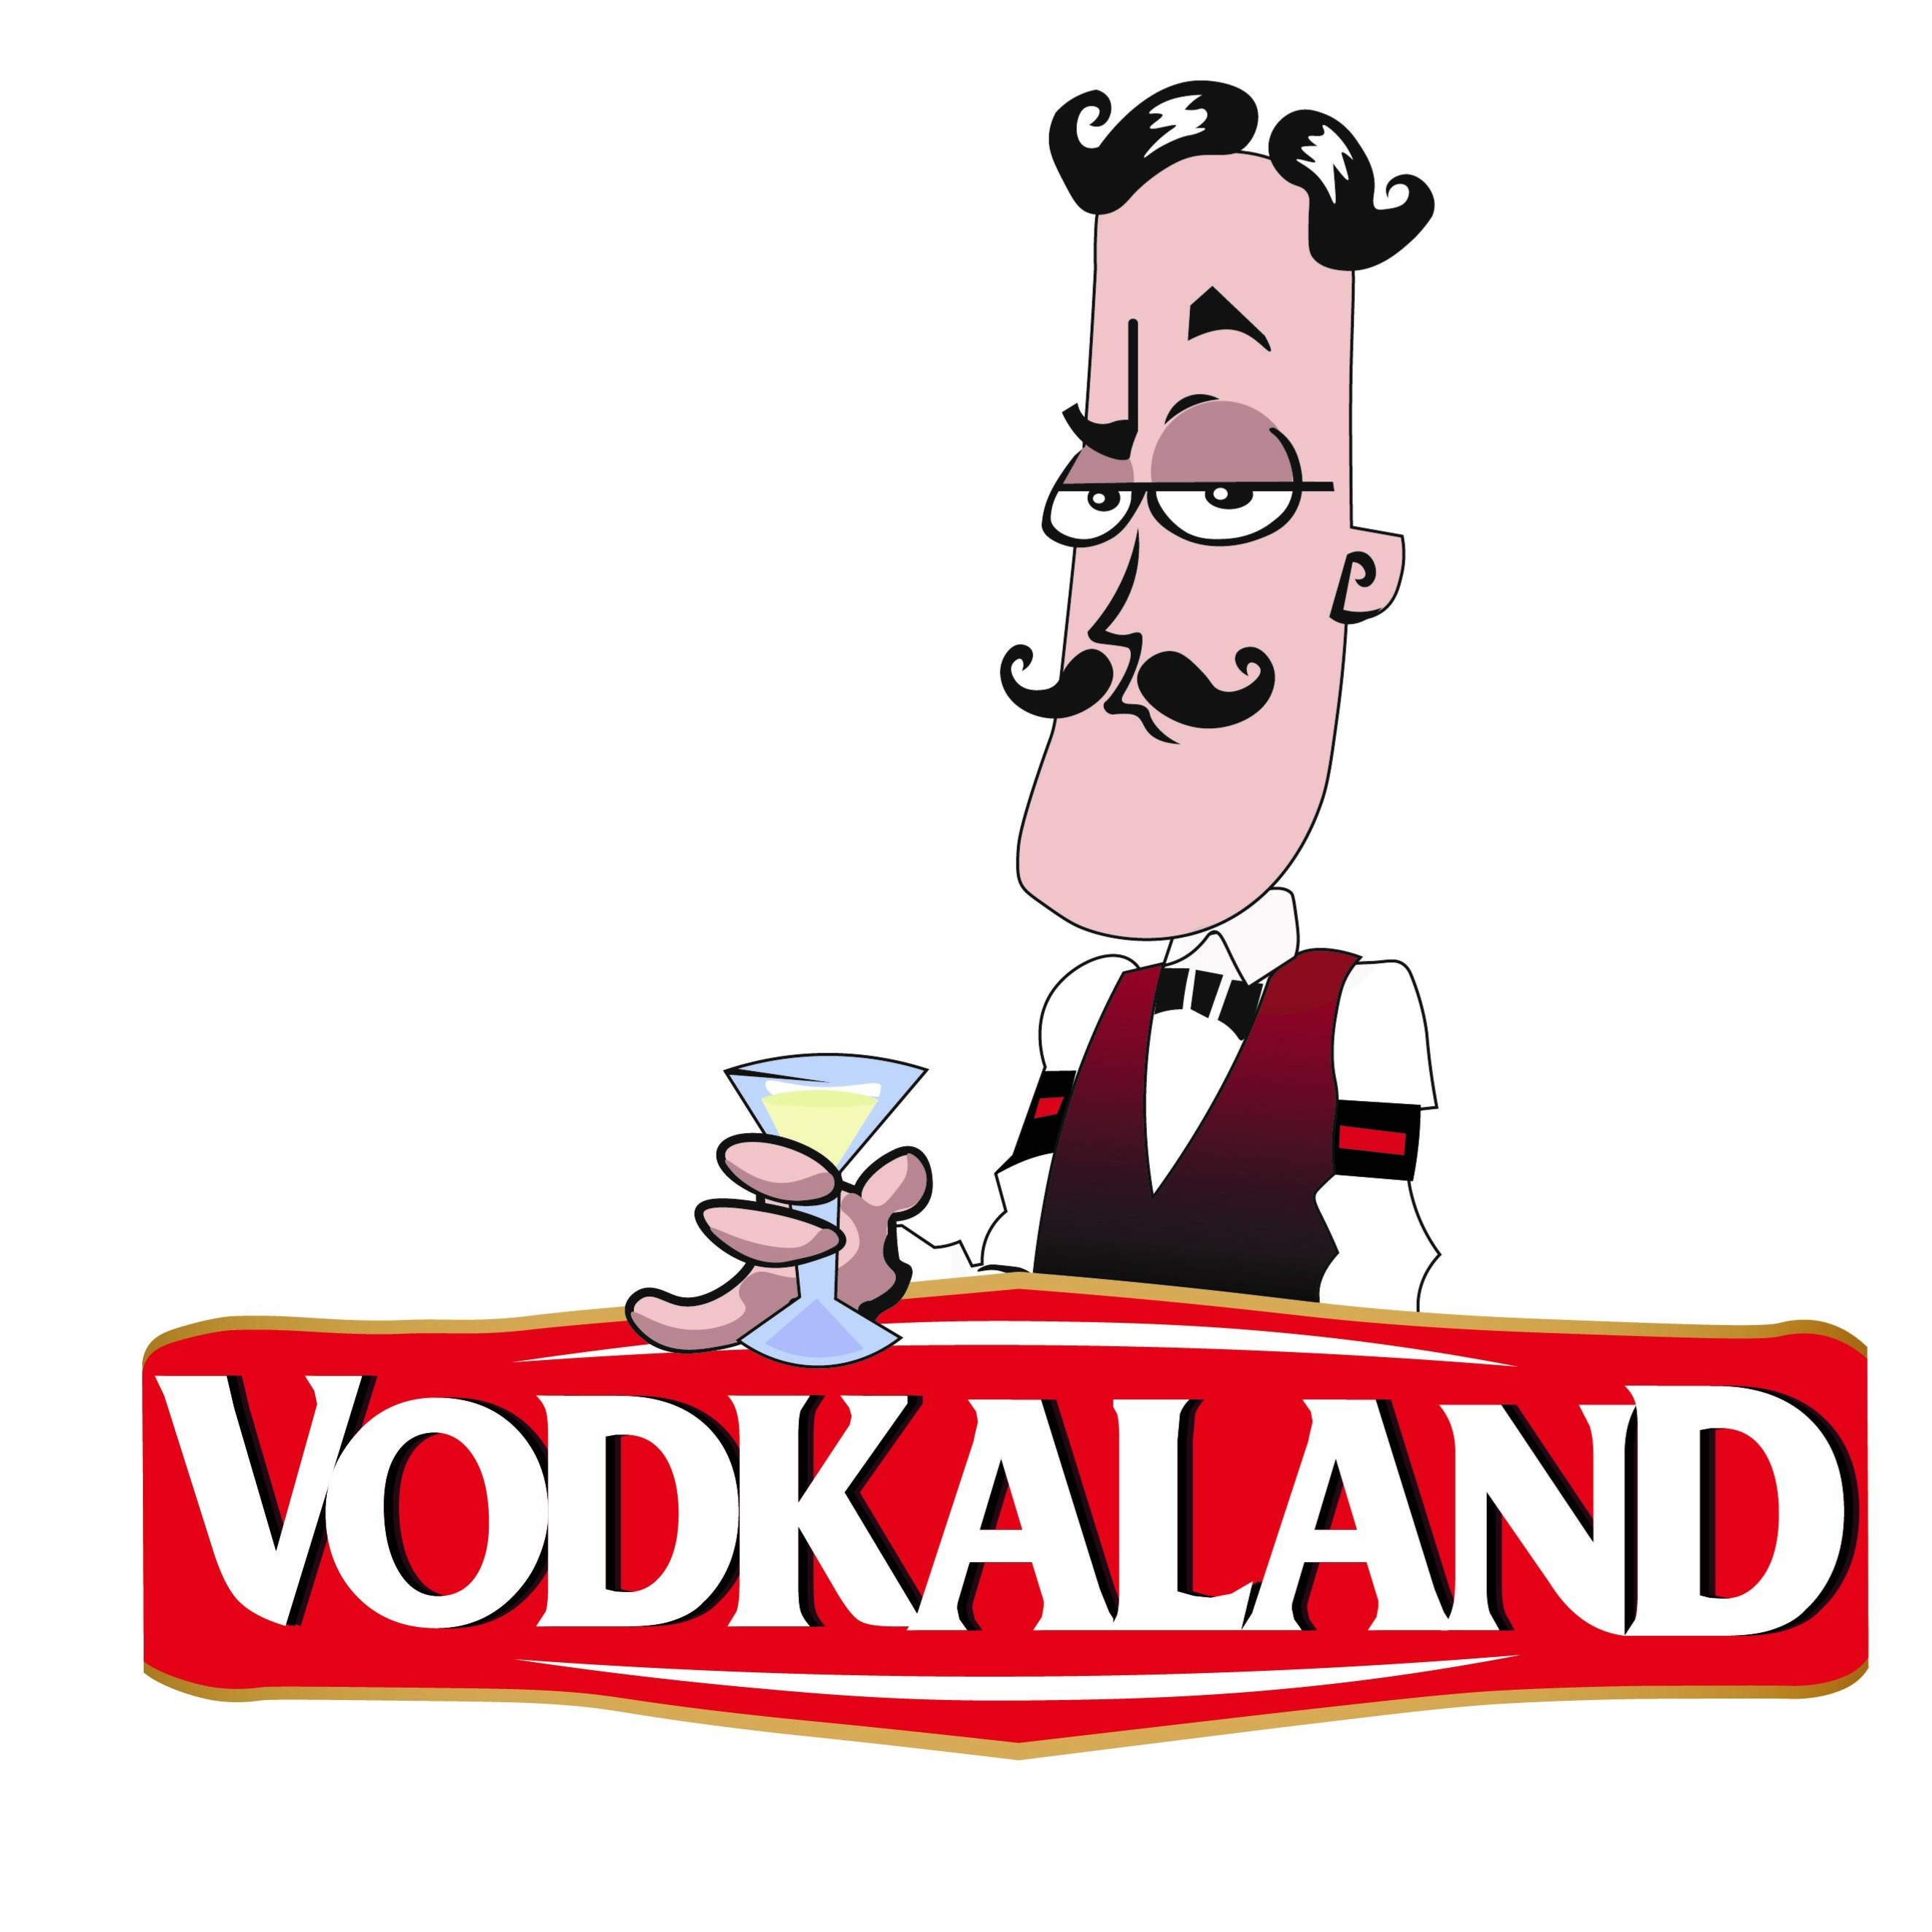 Vodkaland logo